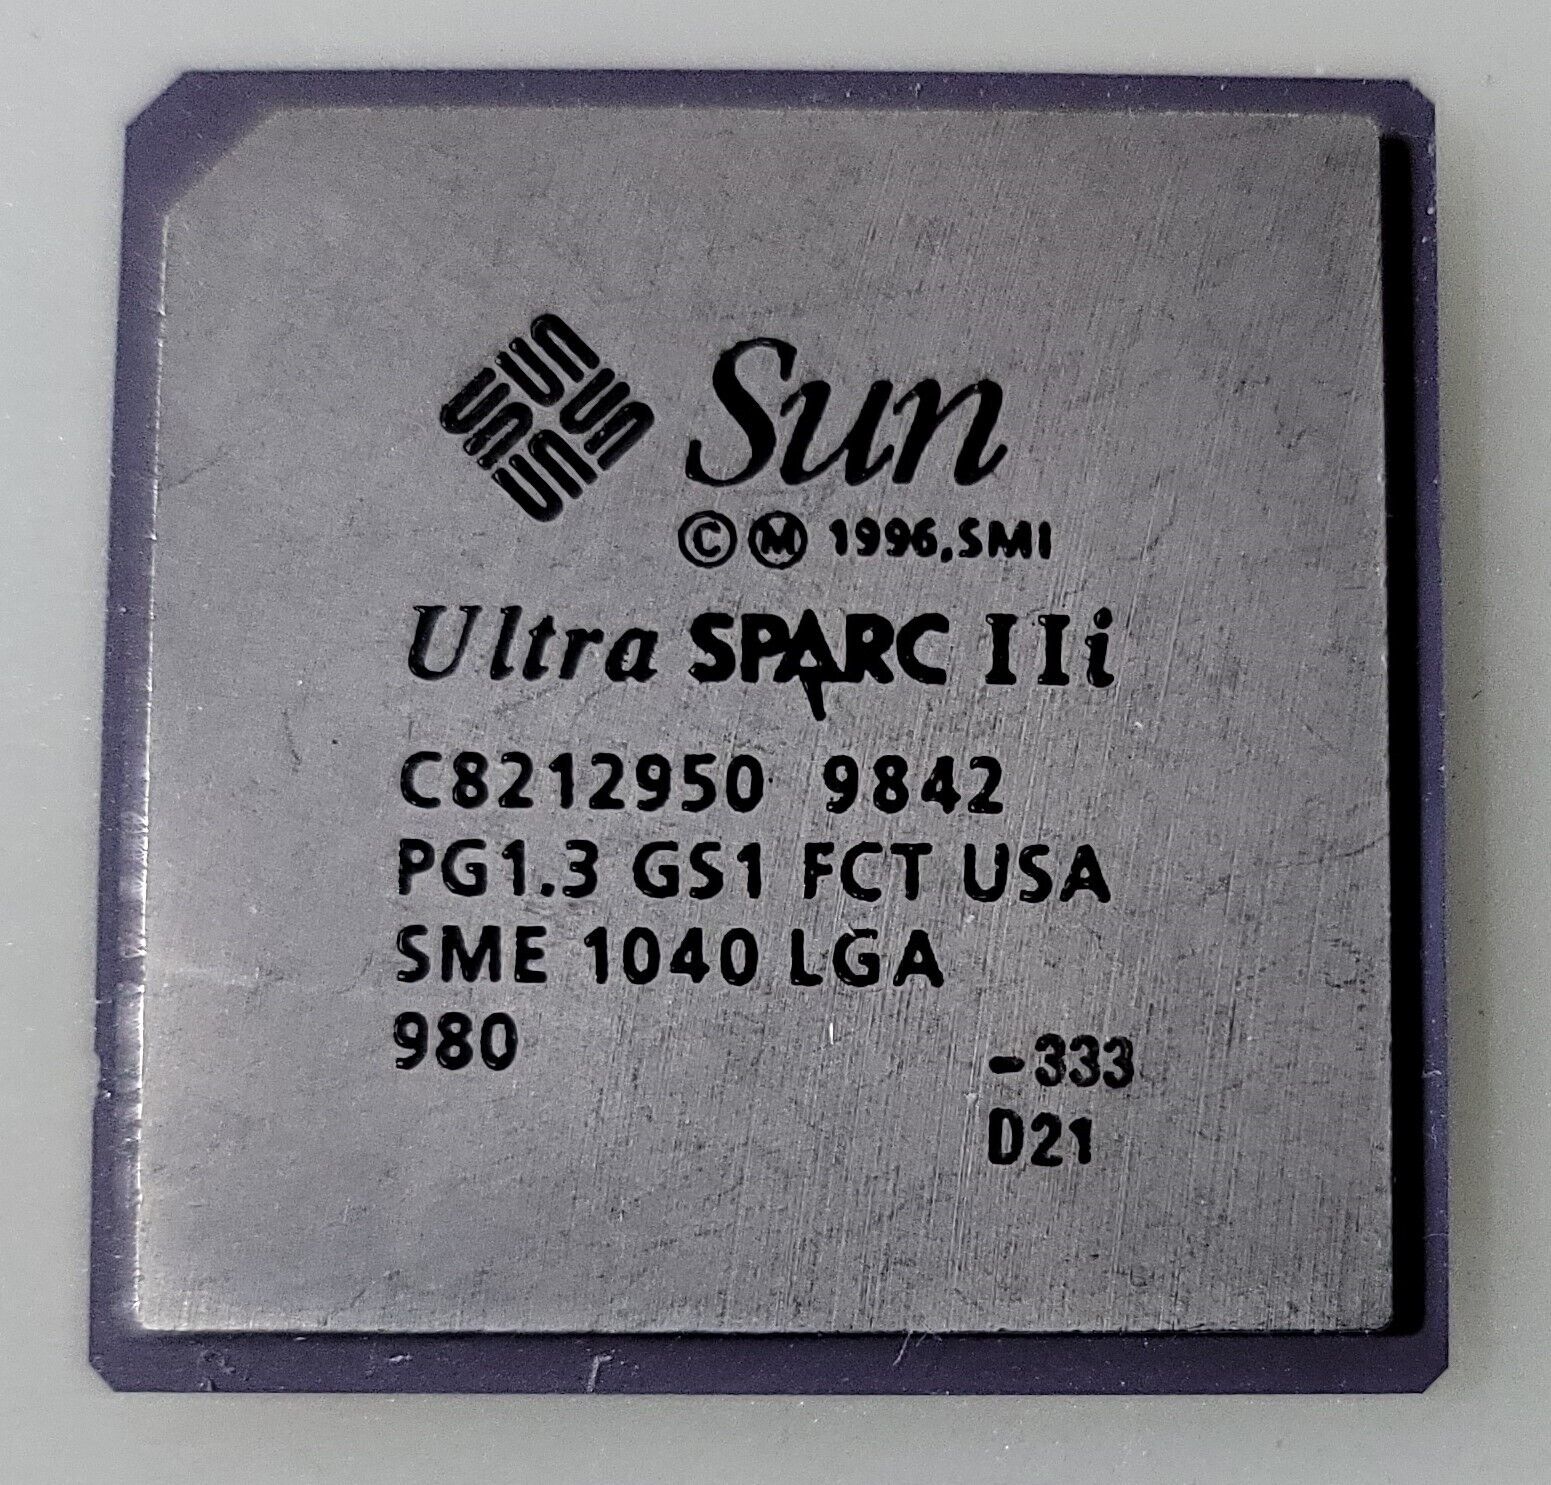 Rare Vintage Sun Ultra Sparc IIi SME1040 LGA Ceramic Processor Gold/Collection